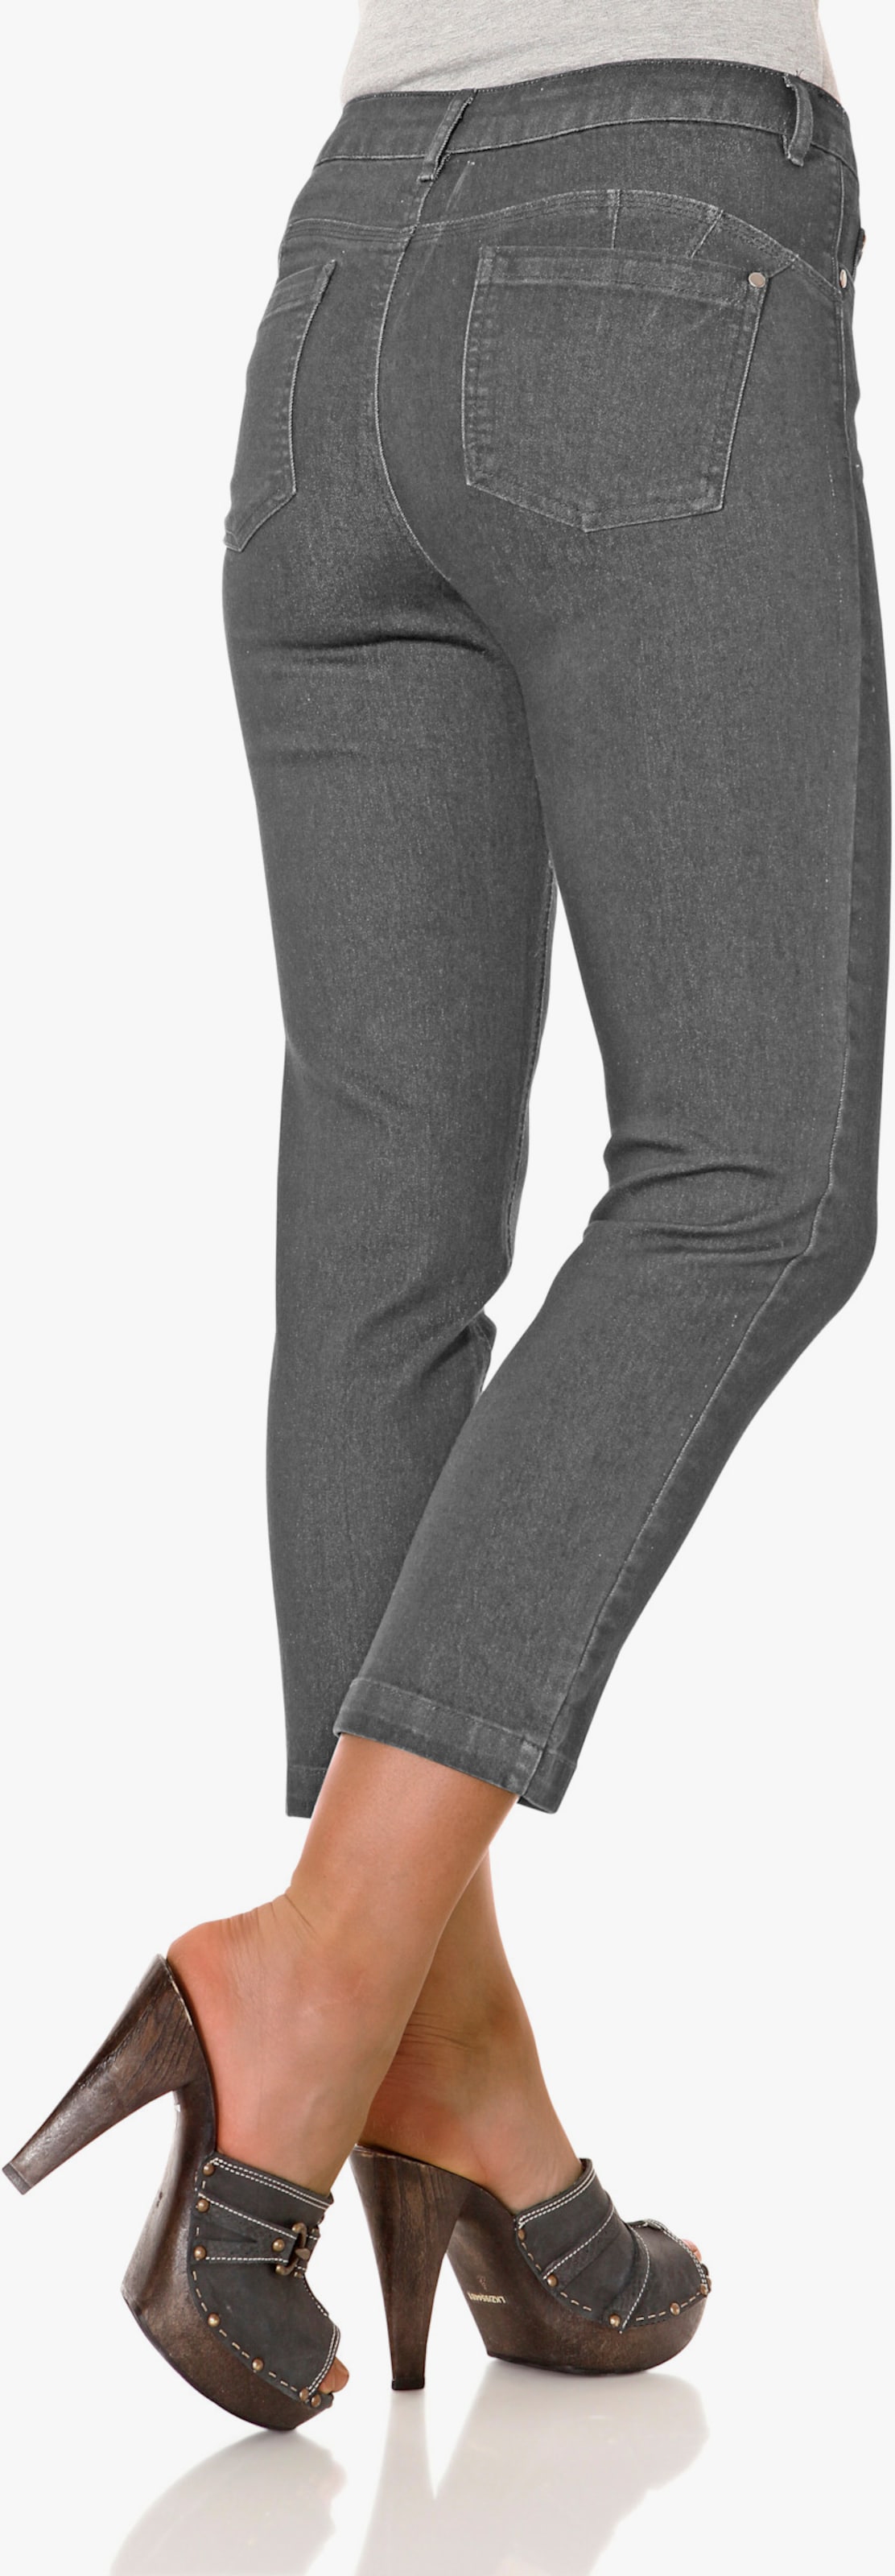 heine 'Buik weg'-jeans - grey denim